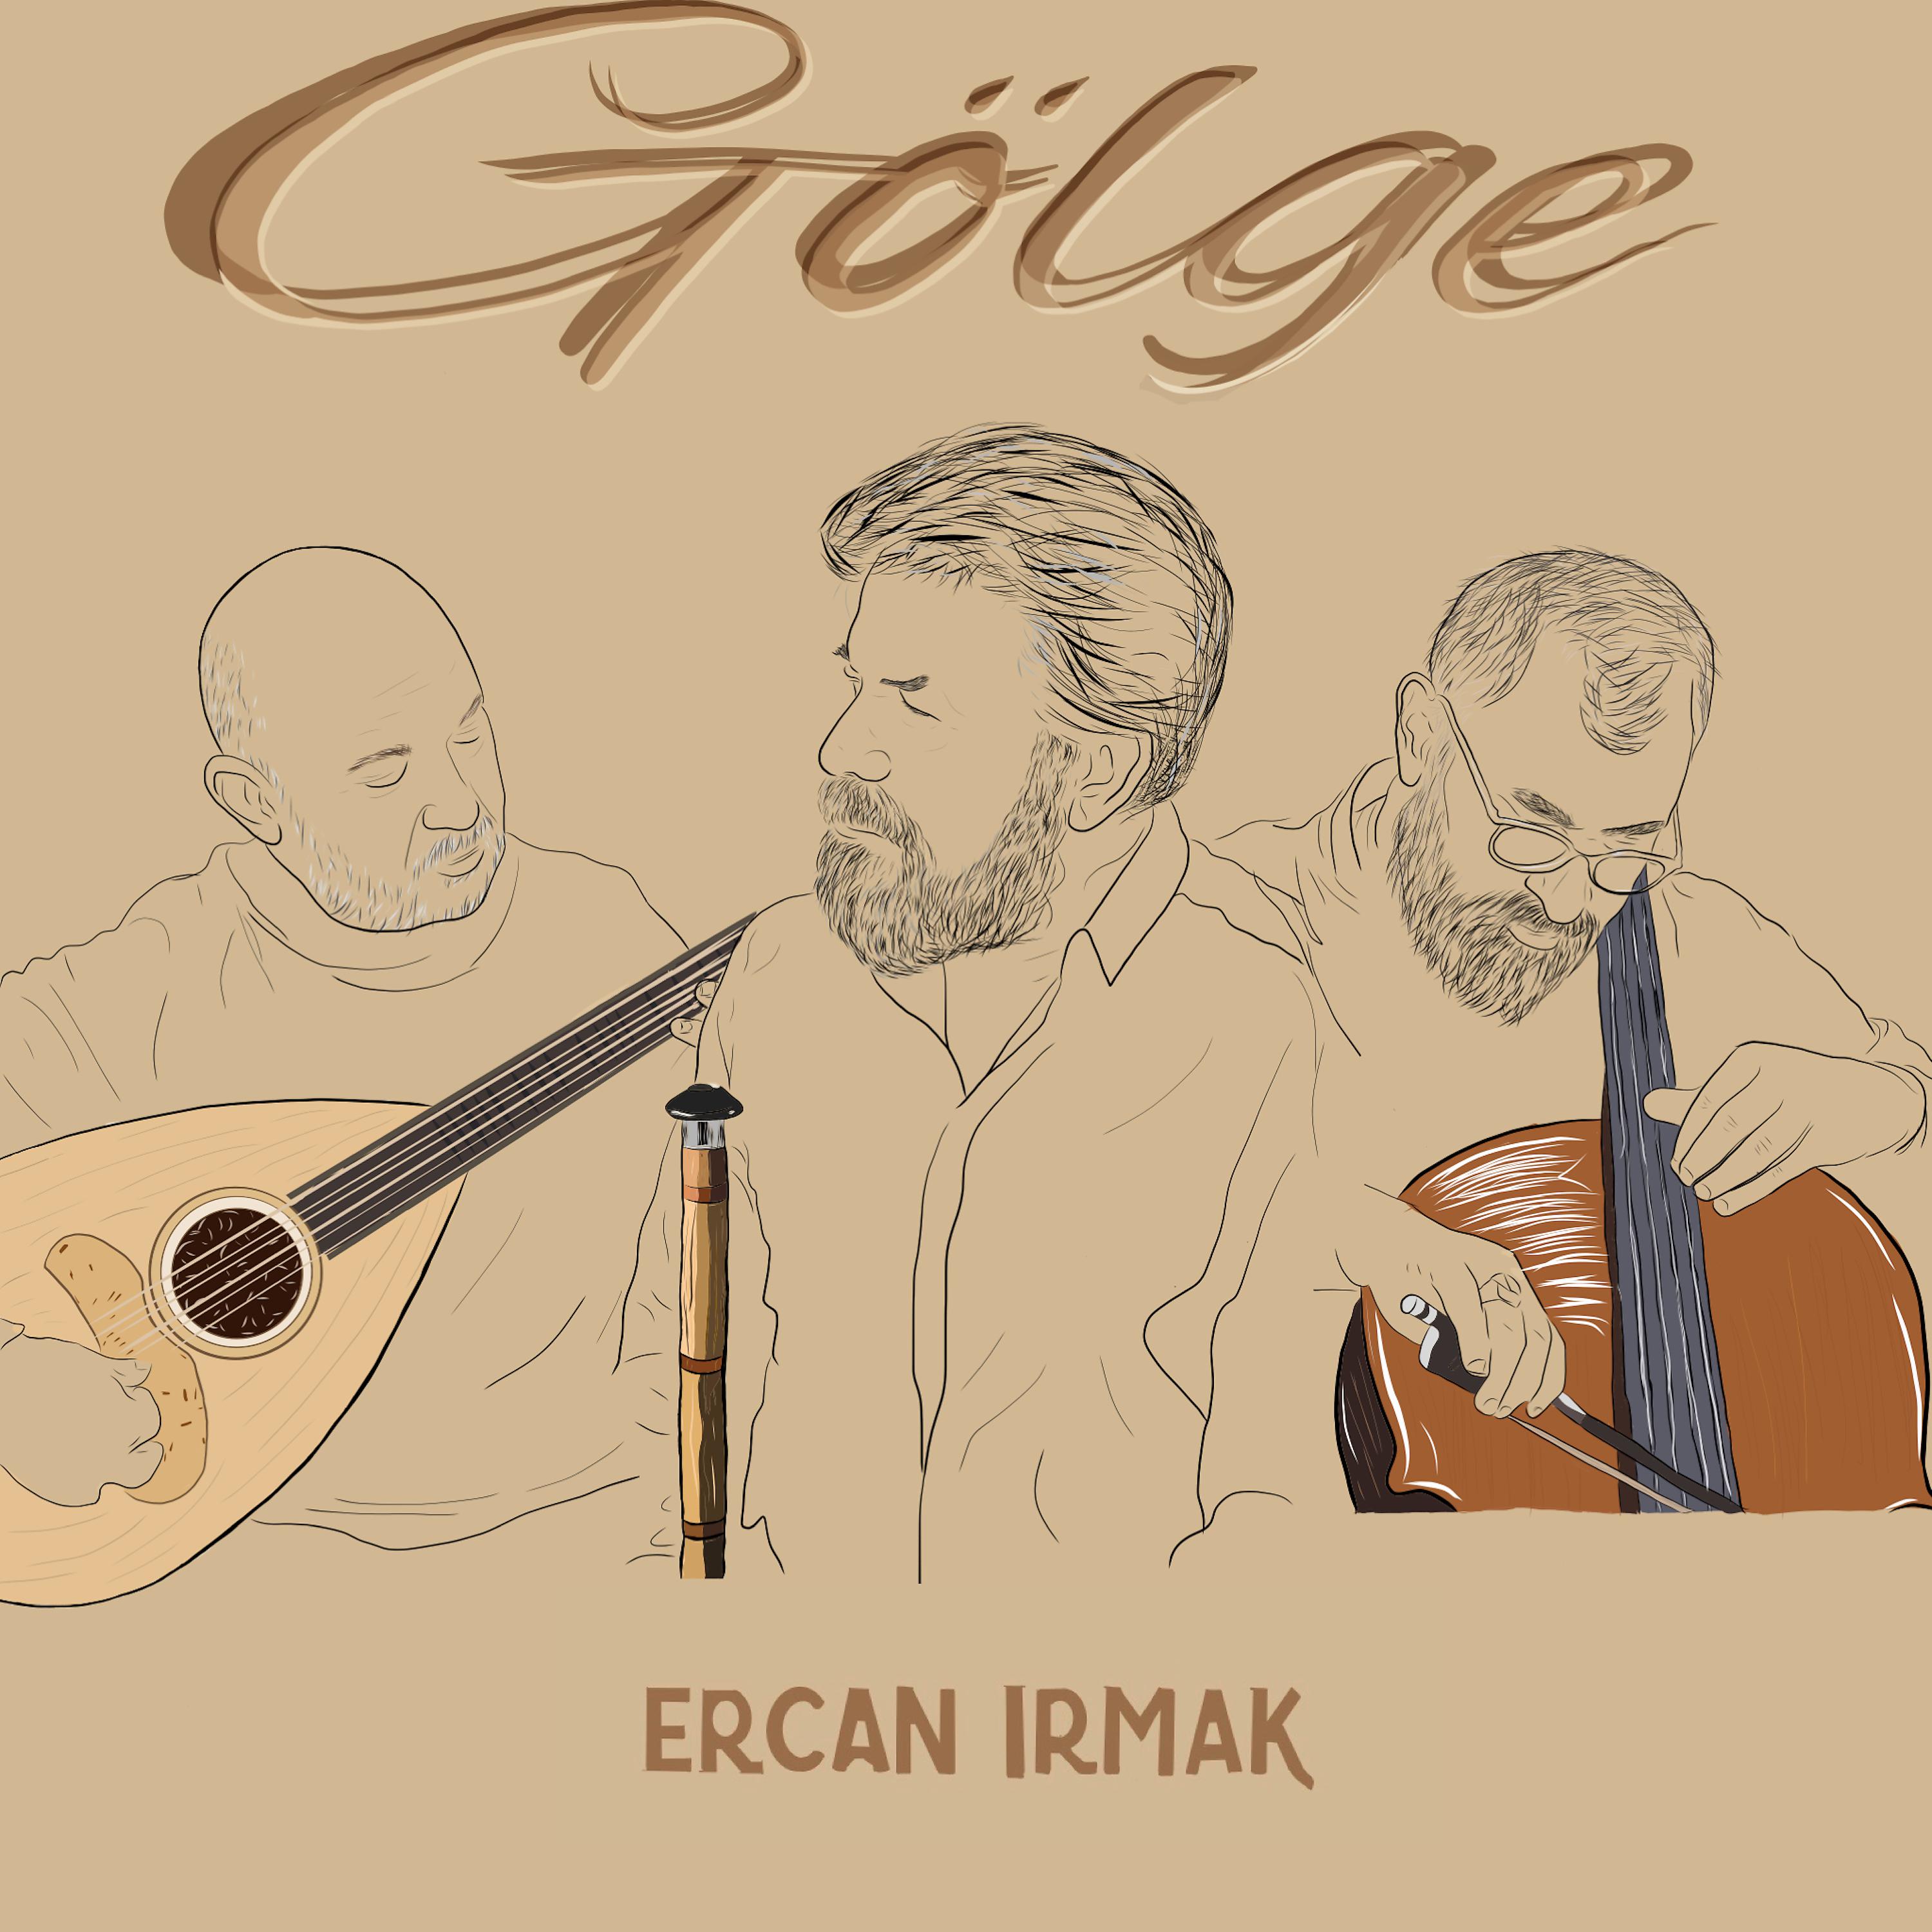 Постер альбома Gölge